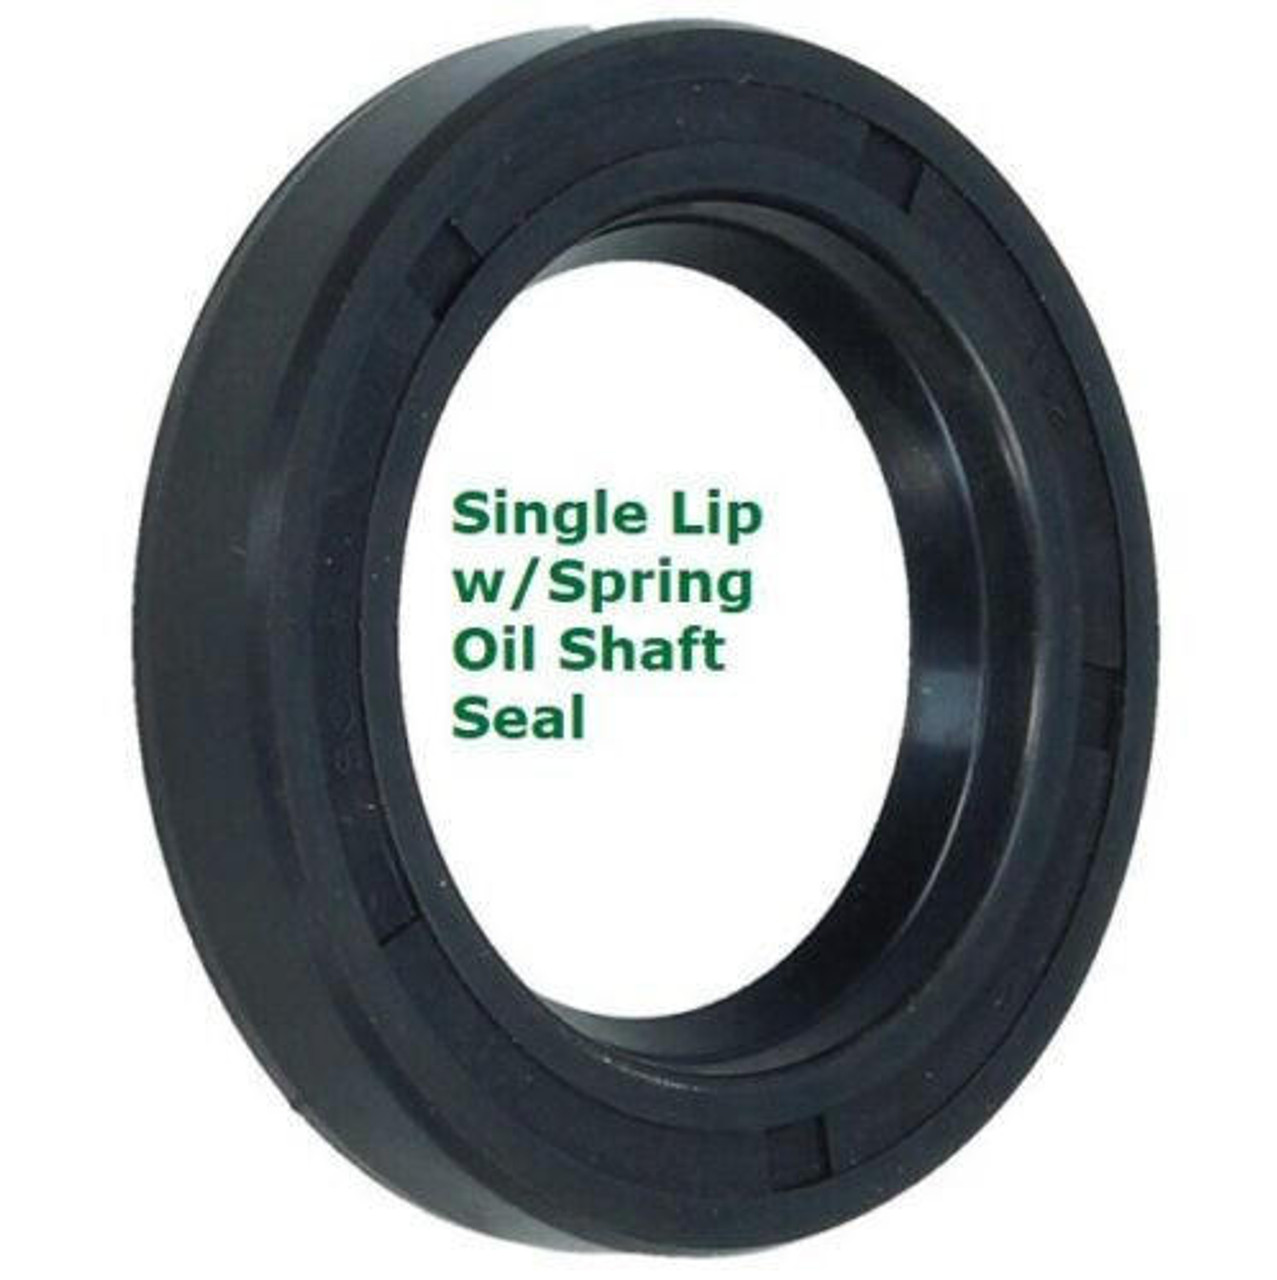 Metric Oil Shaft Seal 100 x 125 x 15mm   Single Lip   Price for 1 pc